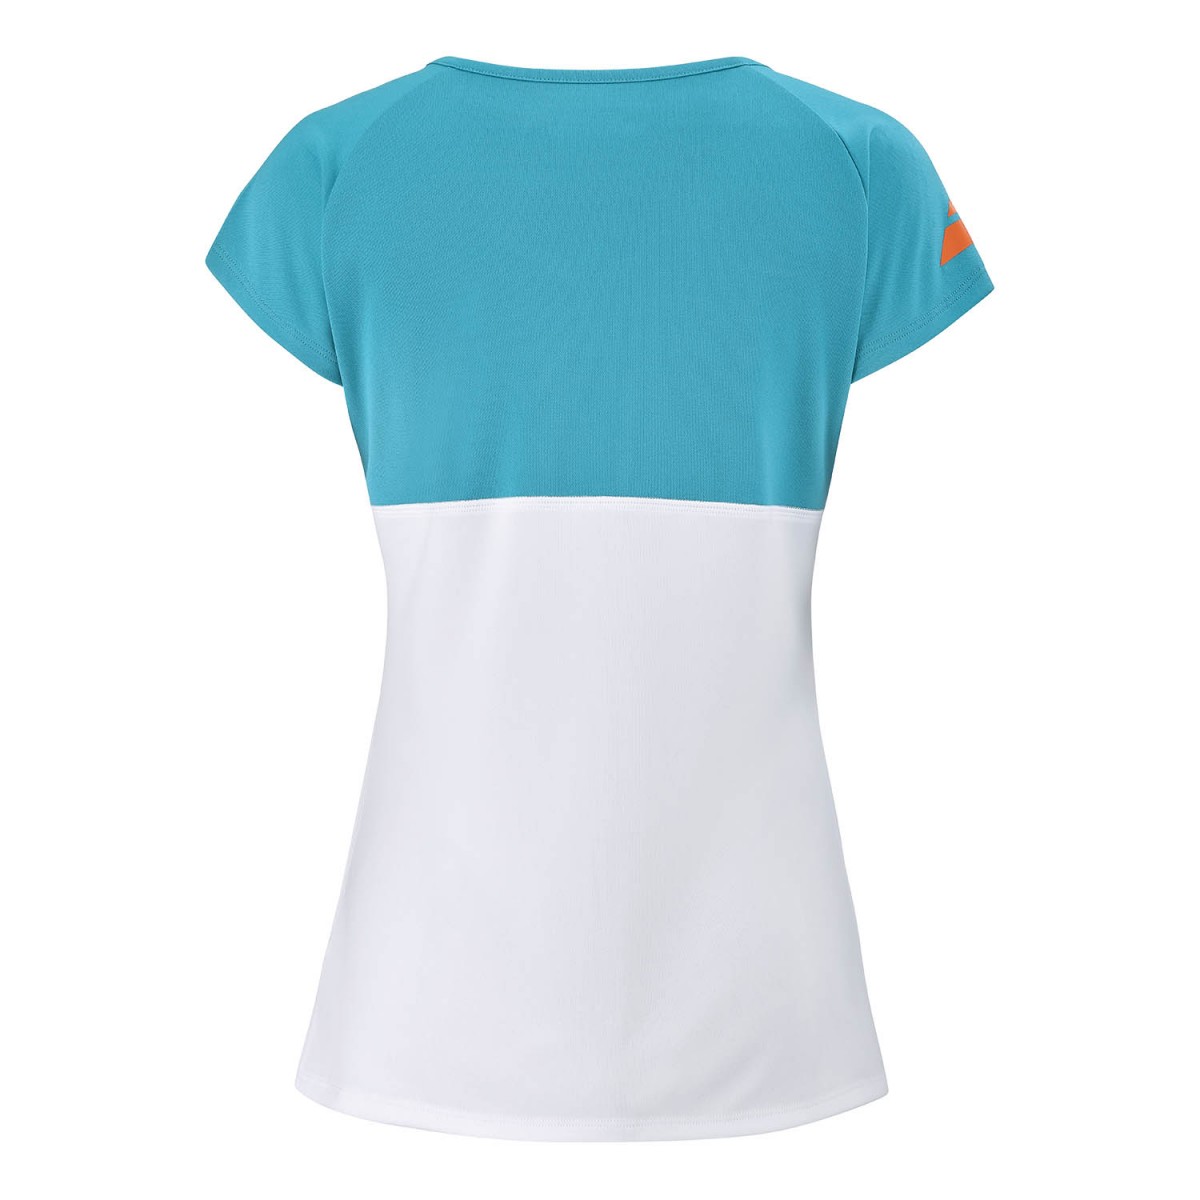 Теннисная футболка женская Babolat Play Cap Sleeve Top Women white/caneel bay